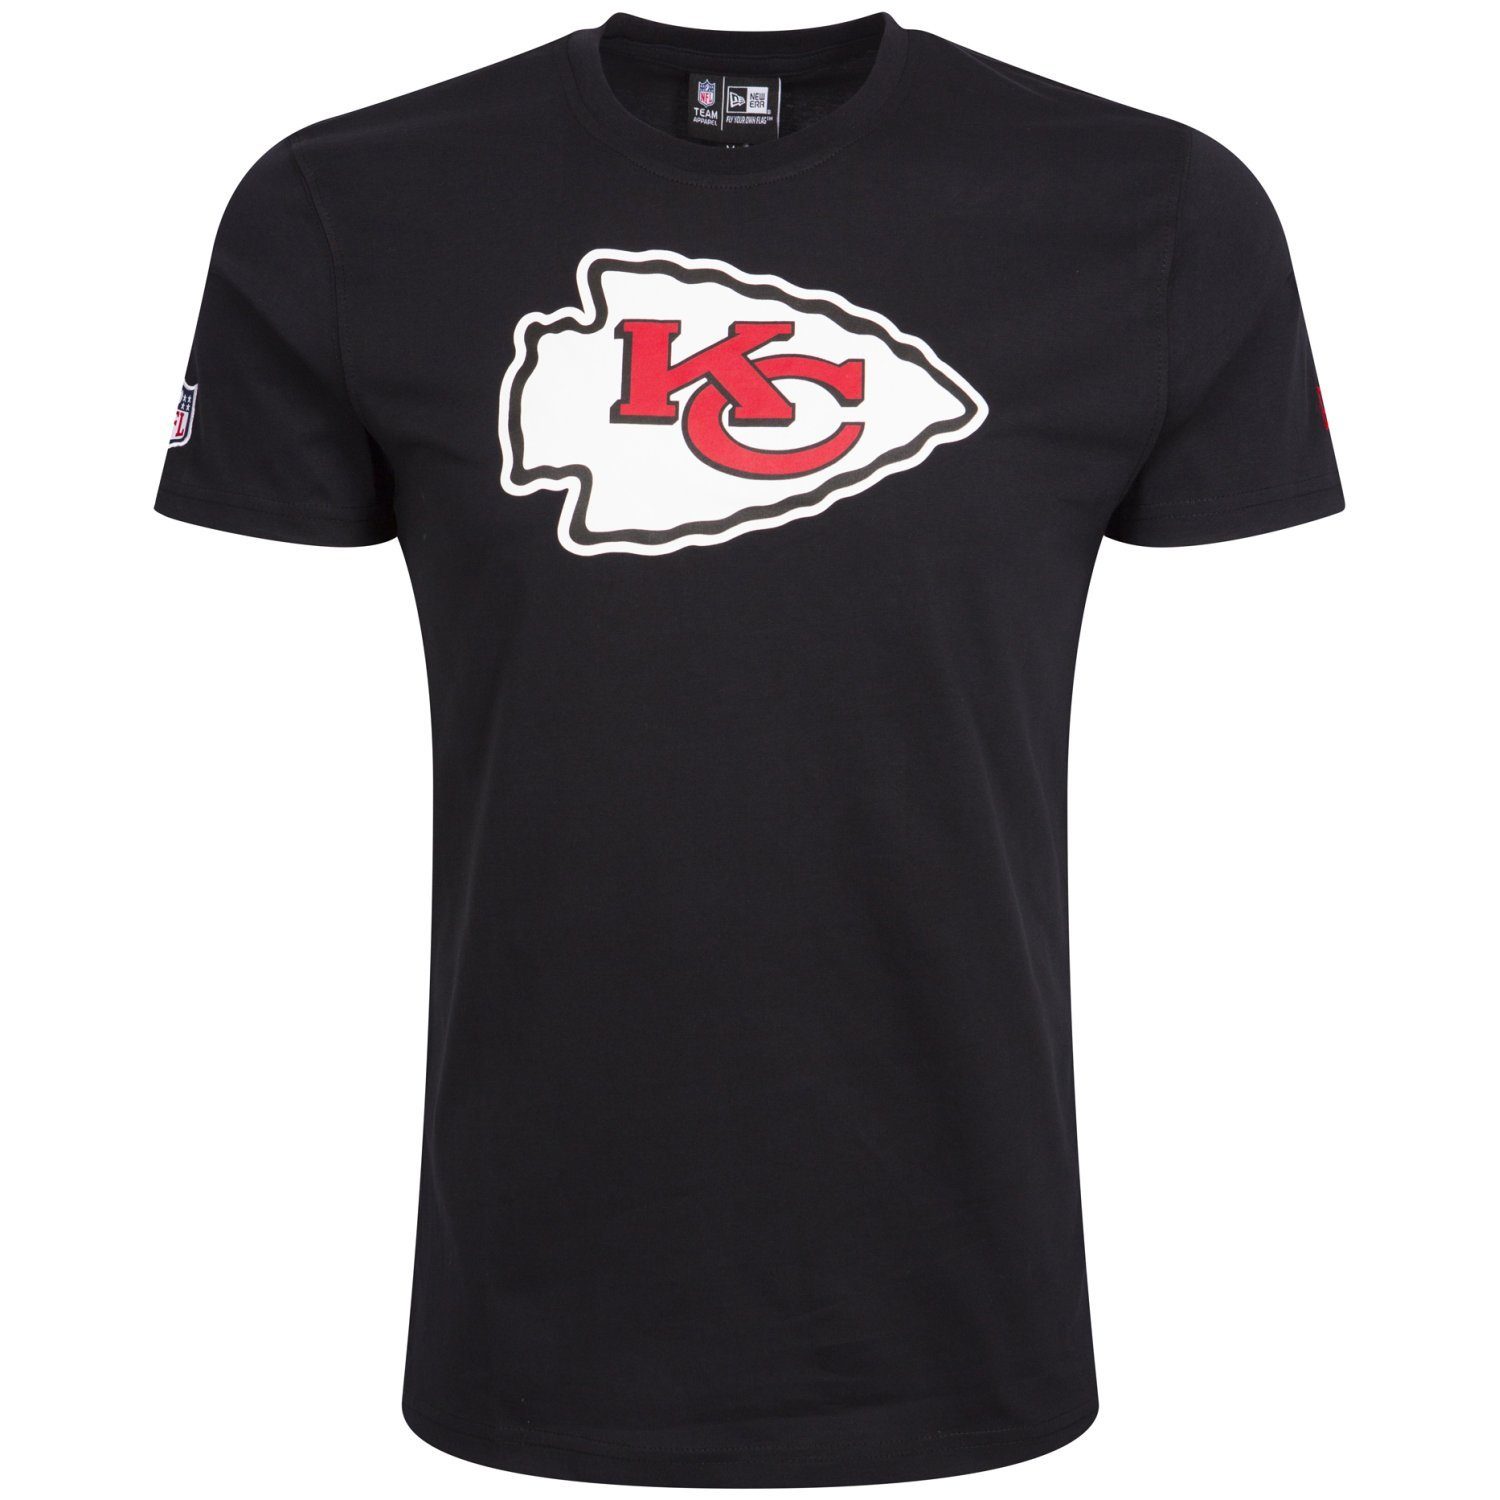 NFL New Print-Shirt Era Chiefs Kansas City